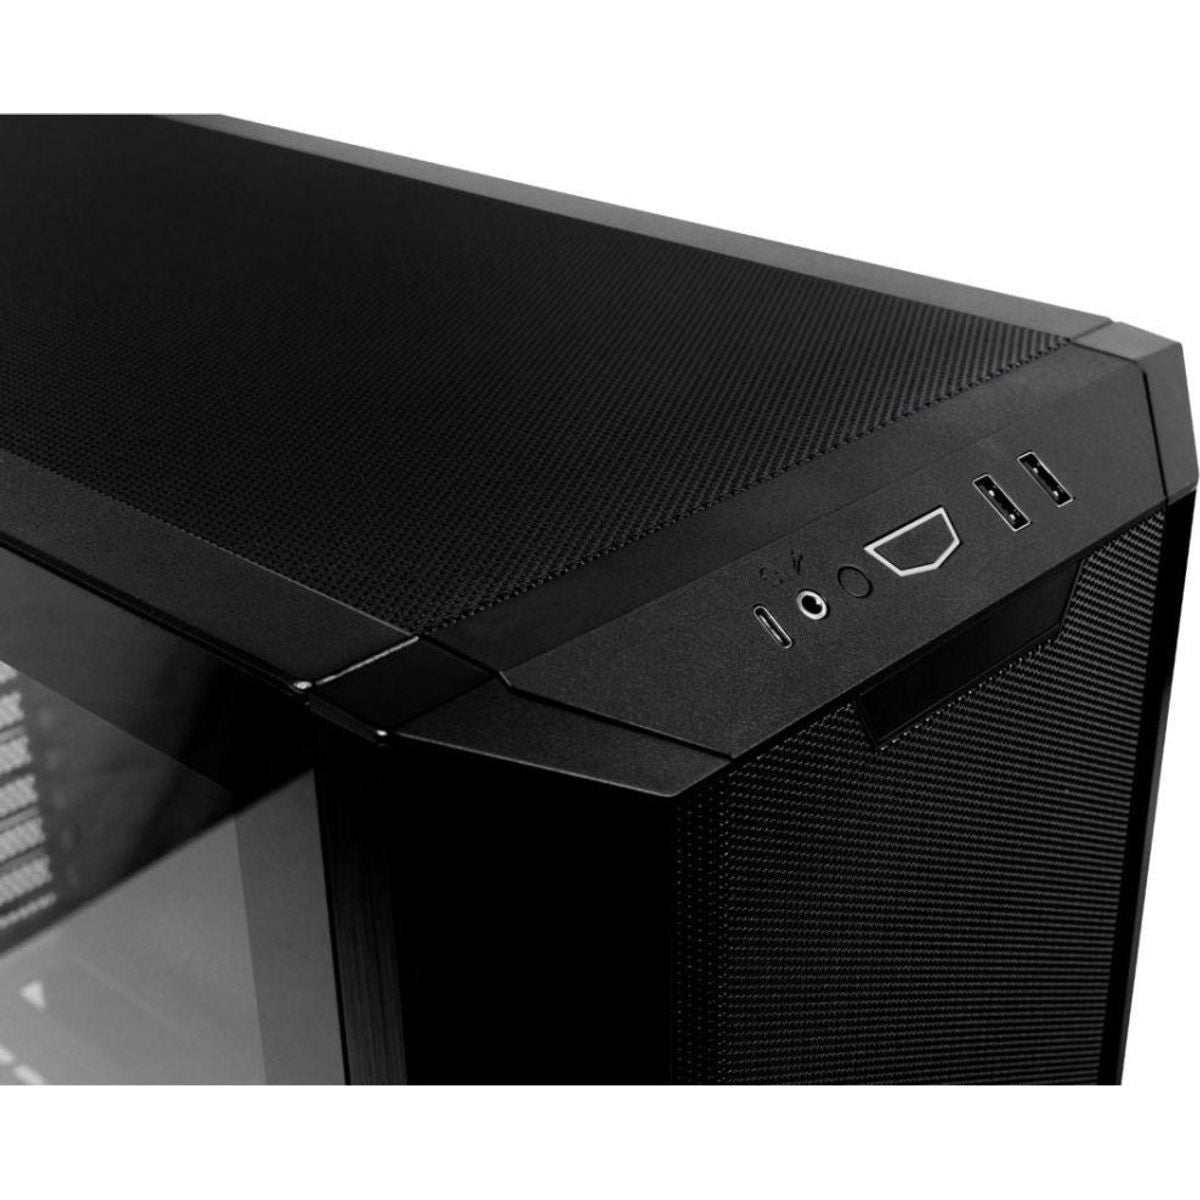 LIAN LI Lancool III BLACK Mid Tower ATX Computer Case - Desktop Computer & Server Cases - Gamertech.shop